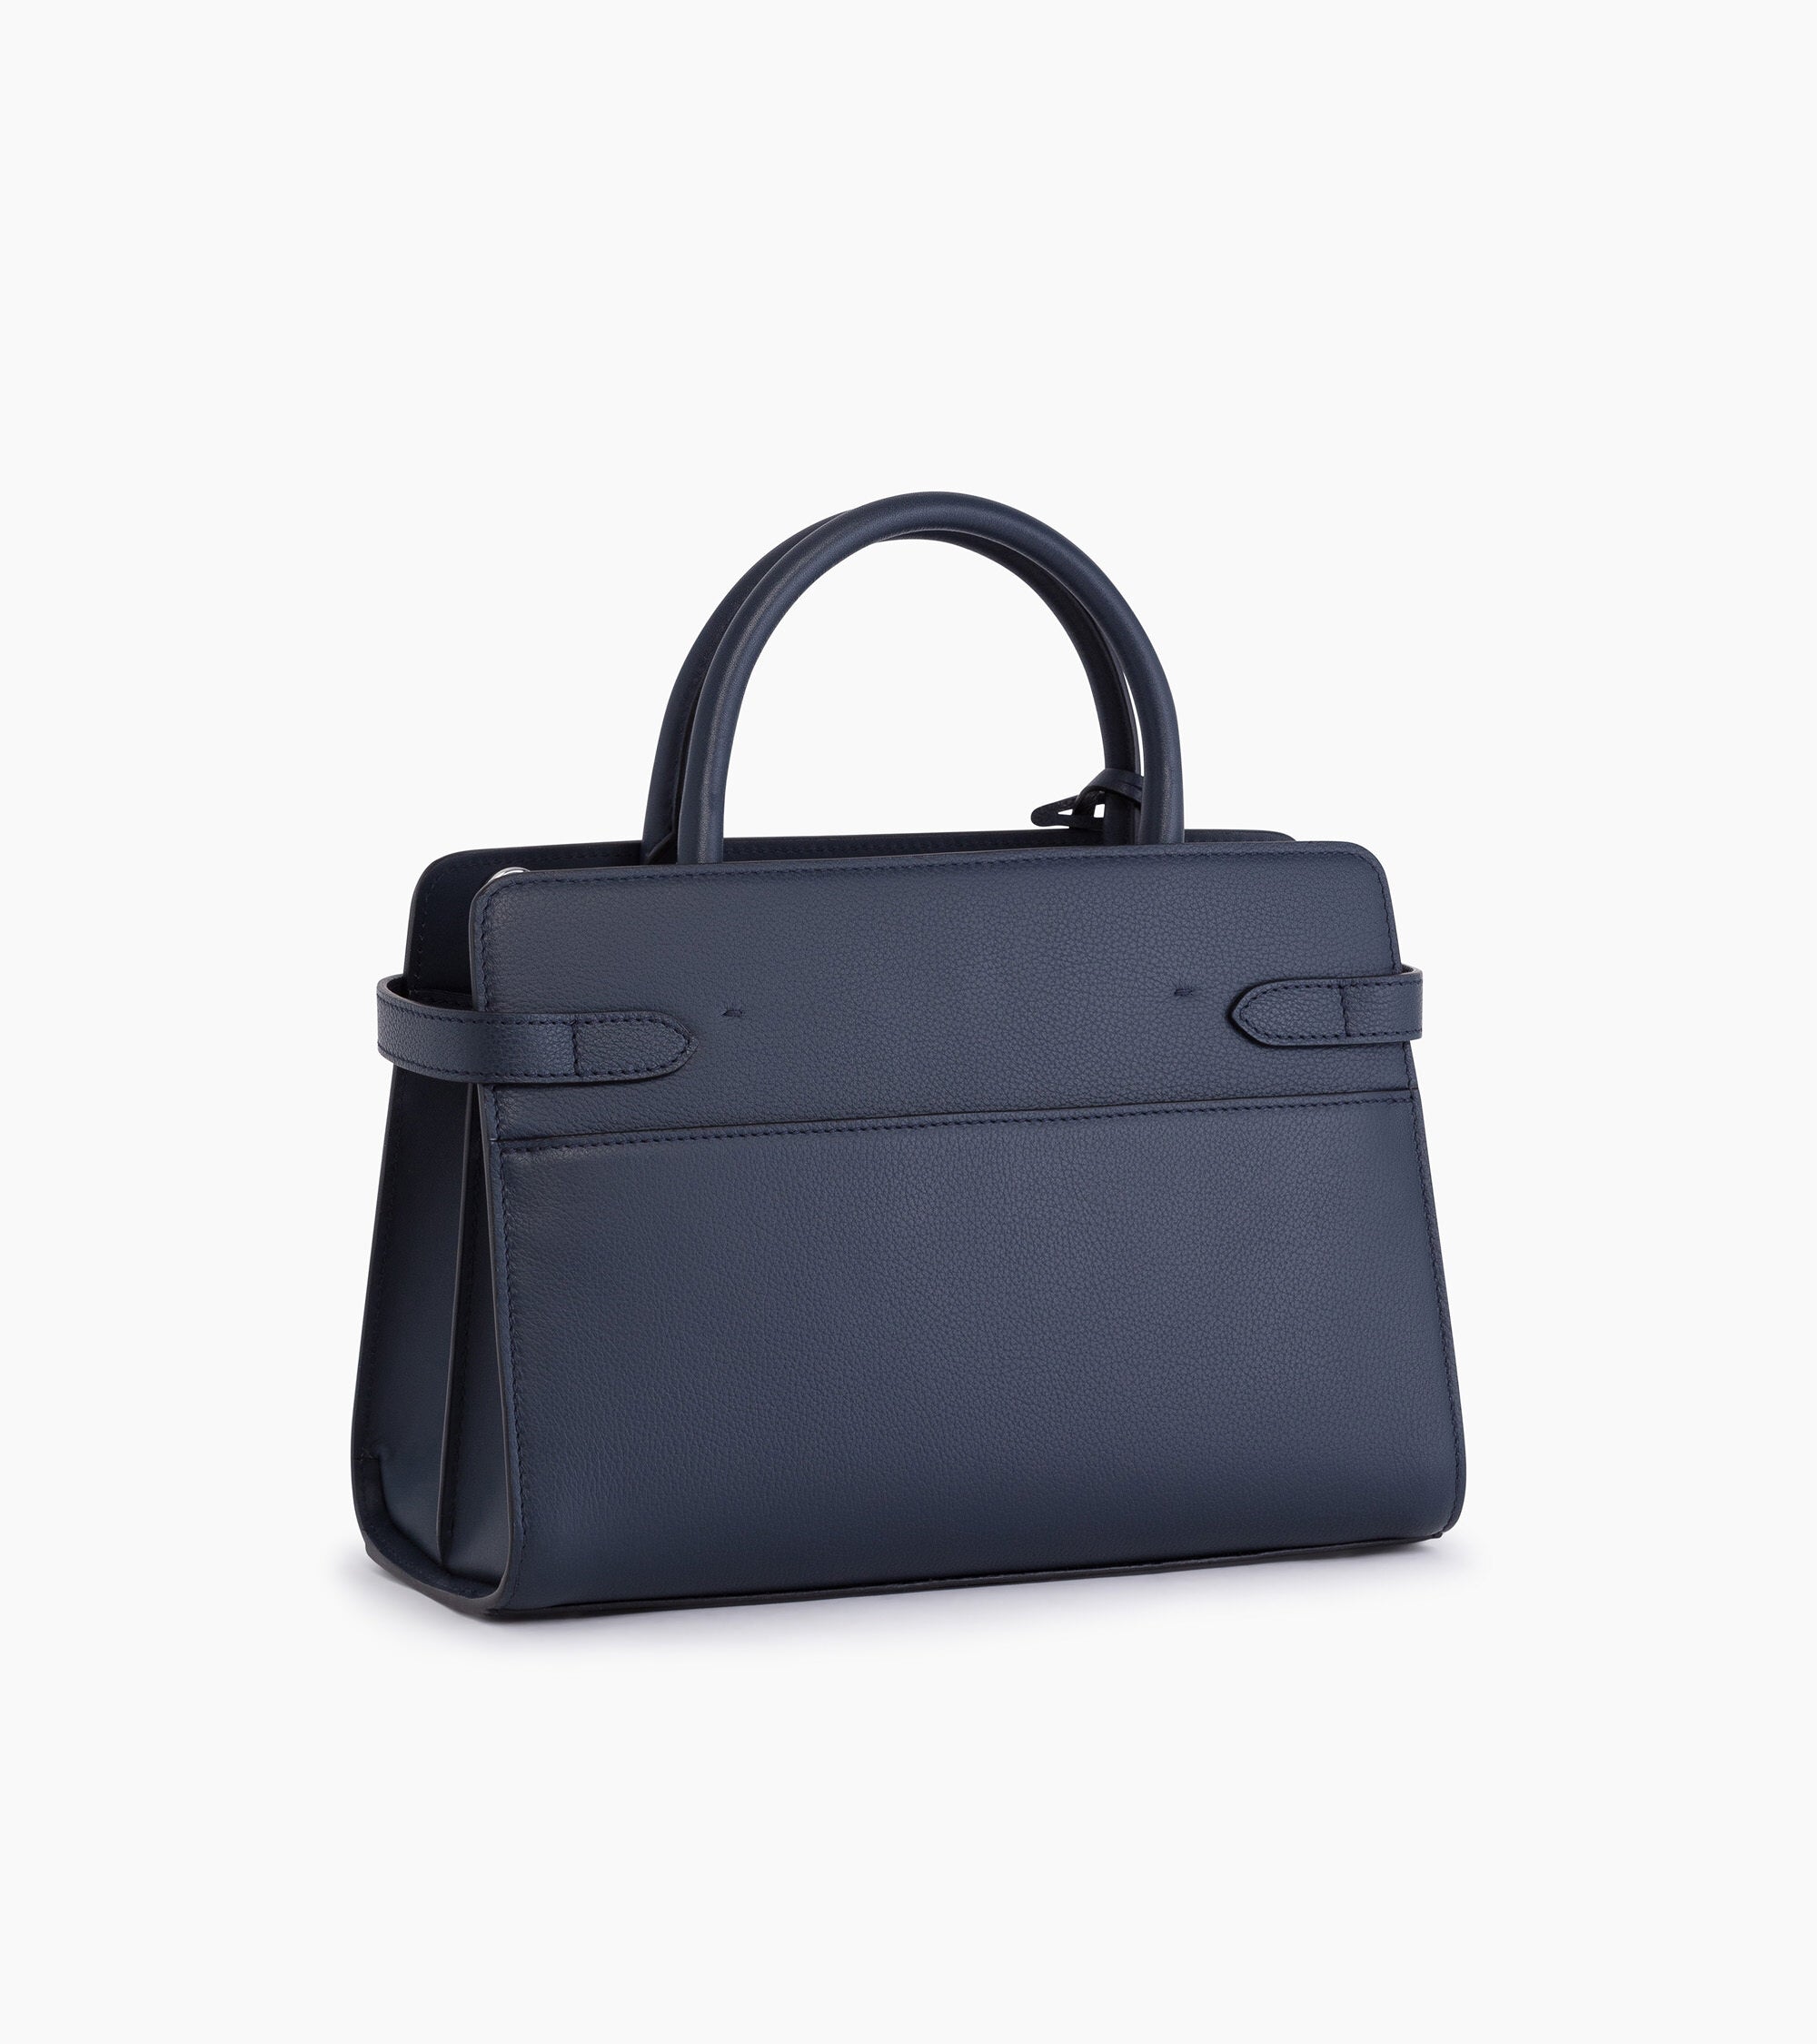 Sans Couture medium handbag in grained leather